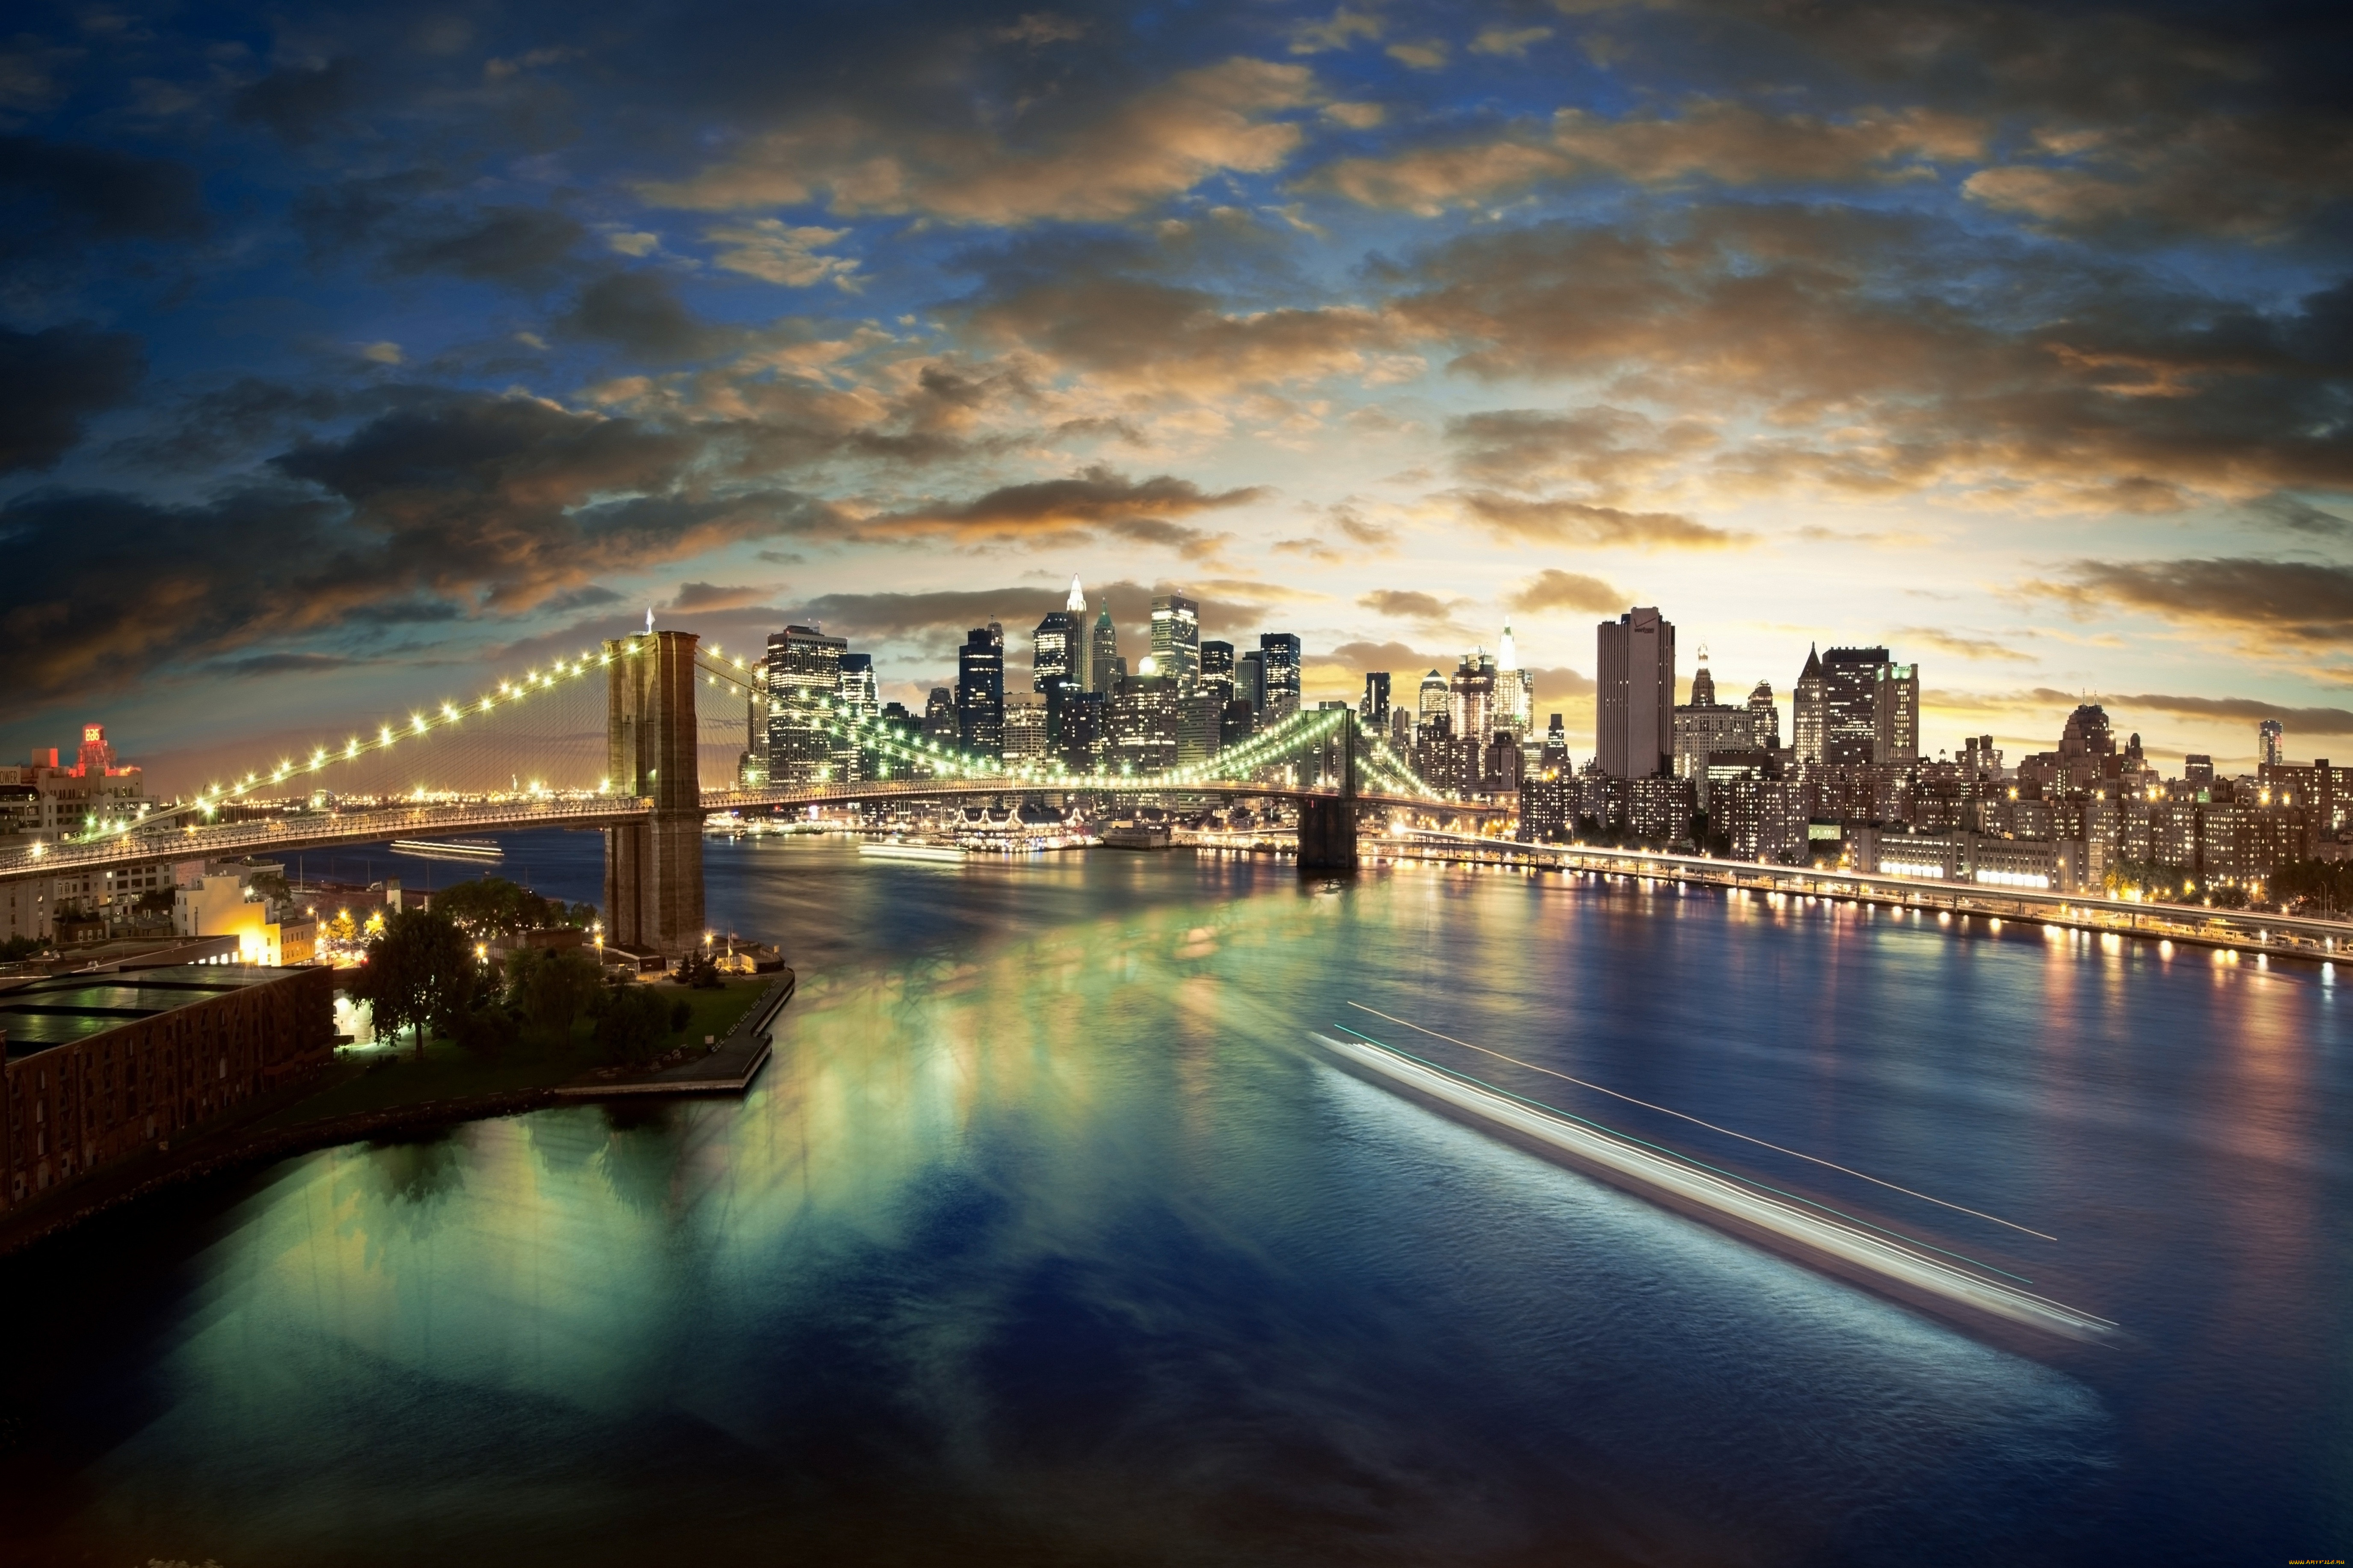 Обои на телефон с галереи. Бруклинский мост Нью-Йорк. Бруклинский мост панорама. Бруклинский мост Нью-Йорк панорама. Мост, Нью-Йорк, река, Манхеттен.